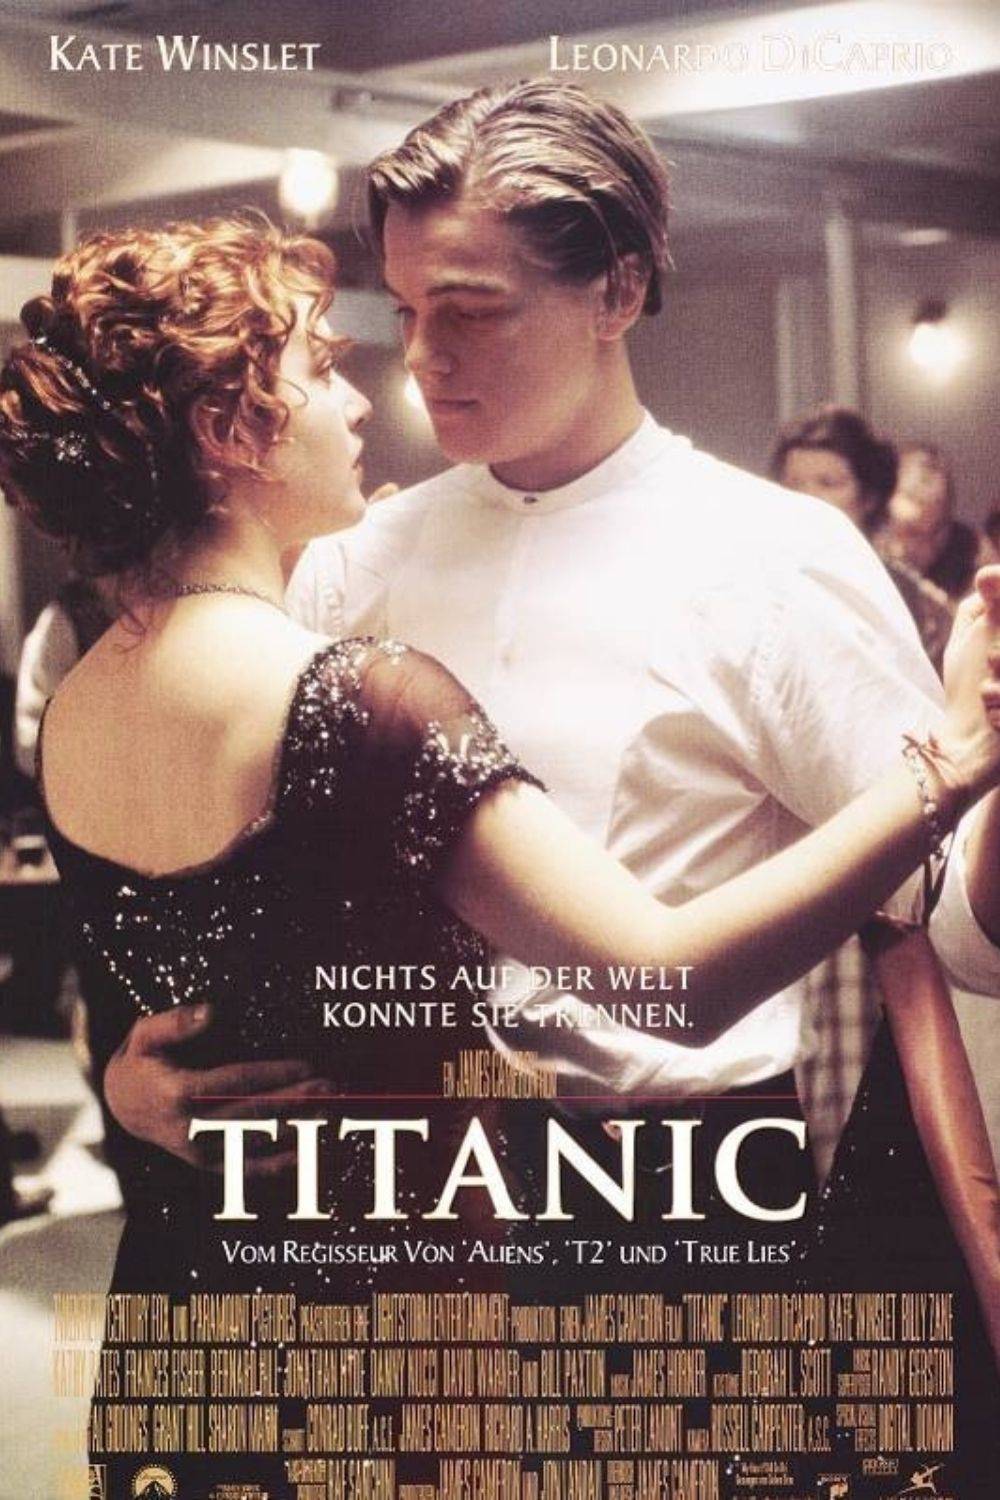 Película de amor clásica - Titanic (1997)